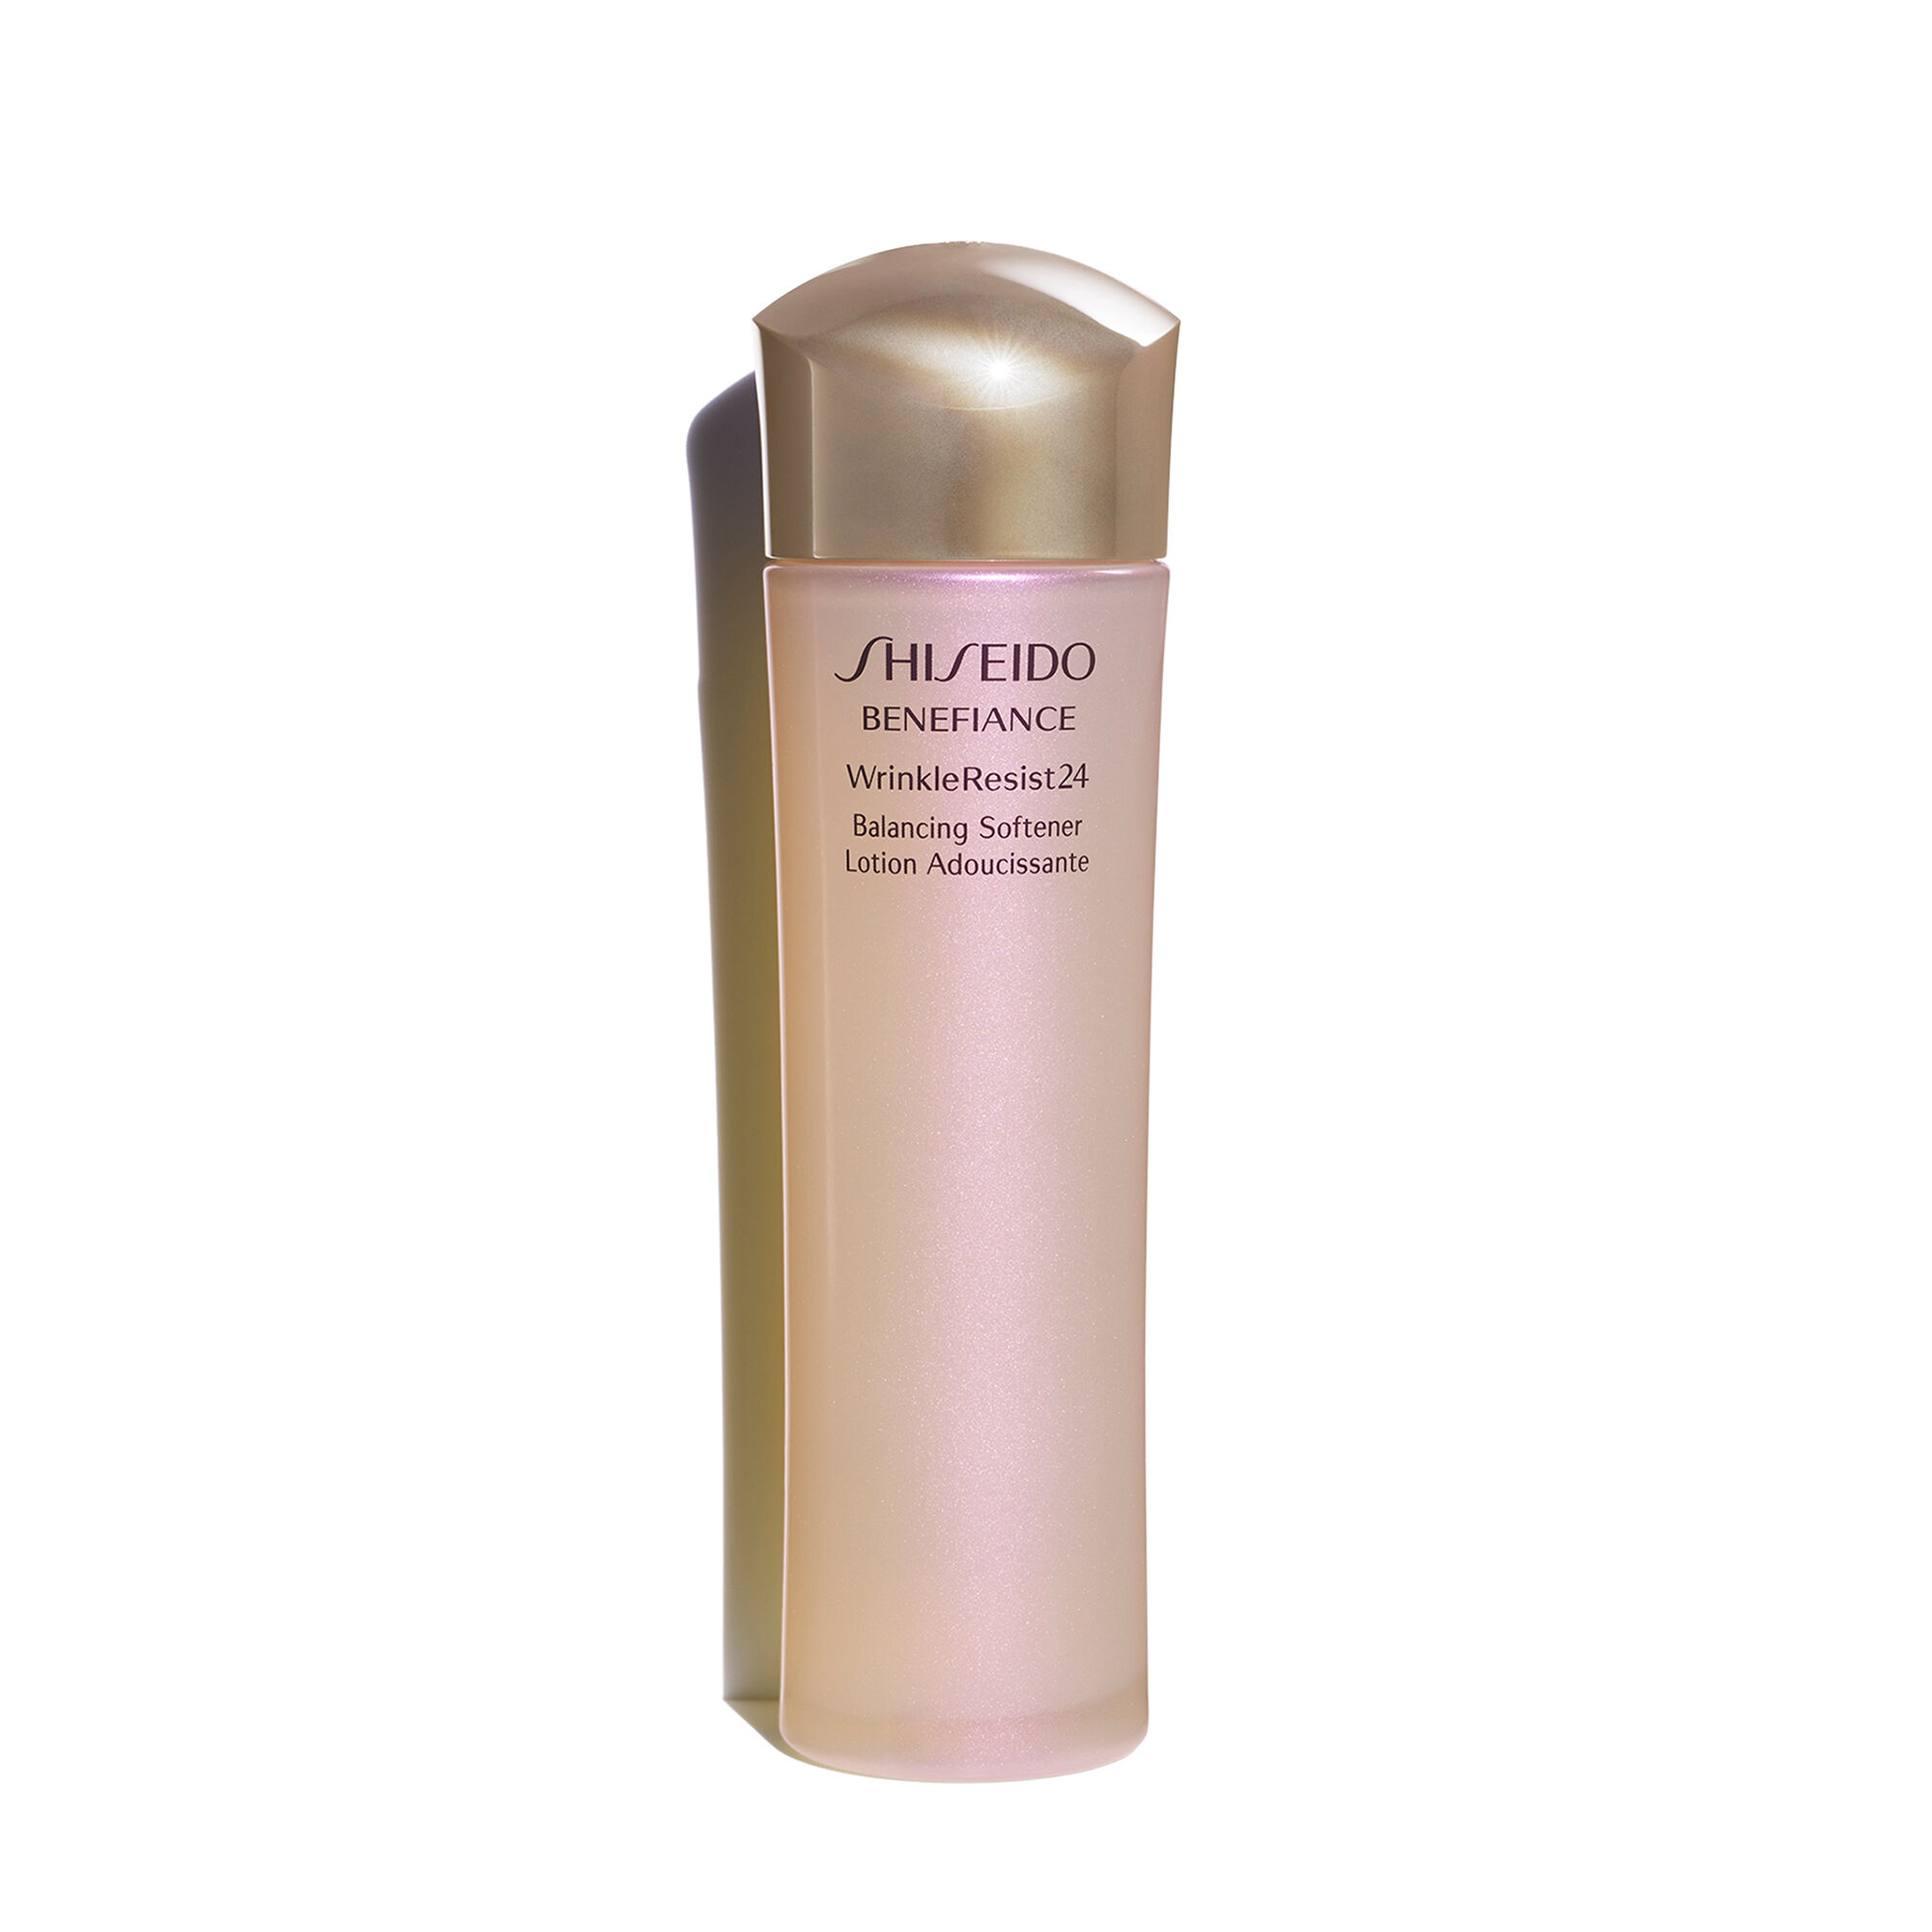 Shiseido Benefiance Wrinkleresist24 Balancing Softener for Unisex, 5 Ounce